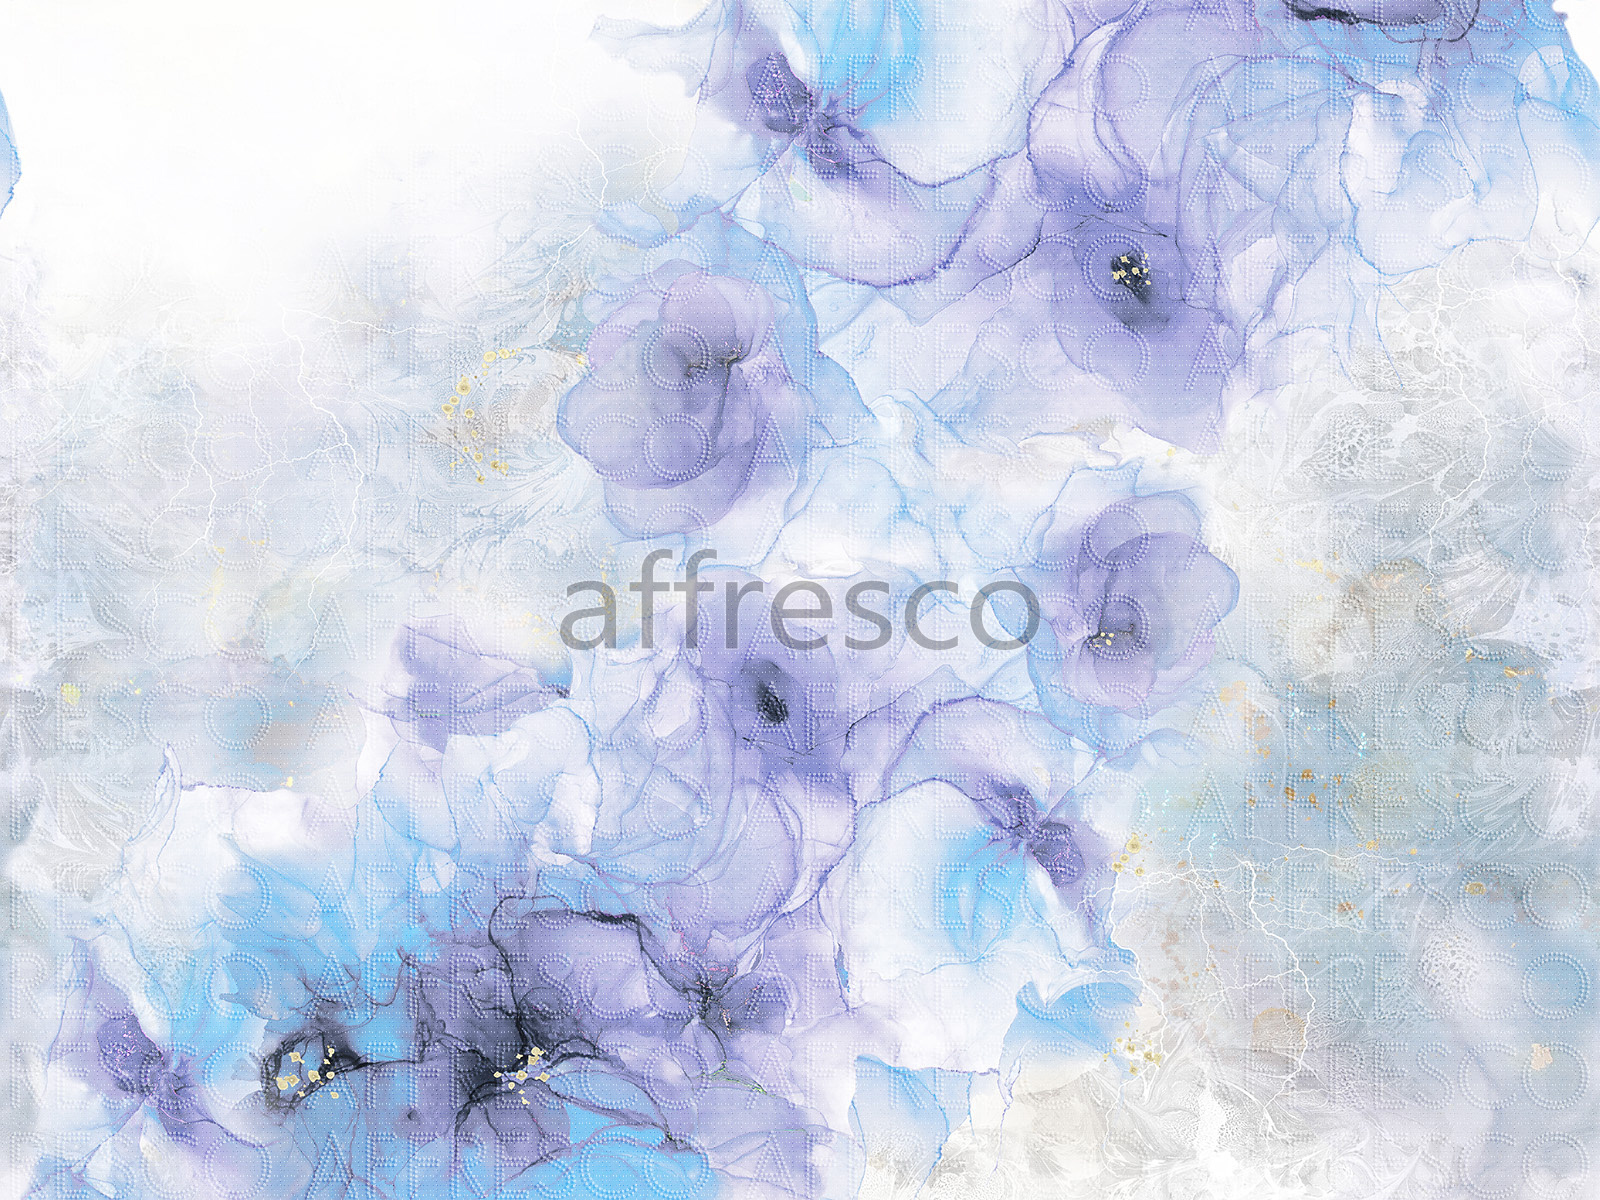 RE915-COL1 | Fine Art | Affresco Factory